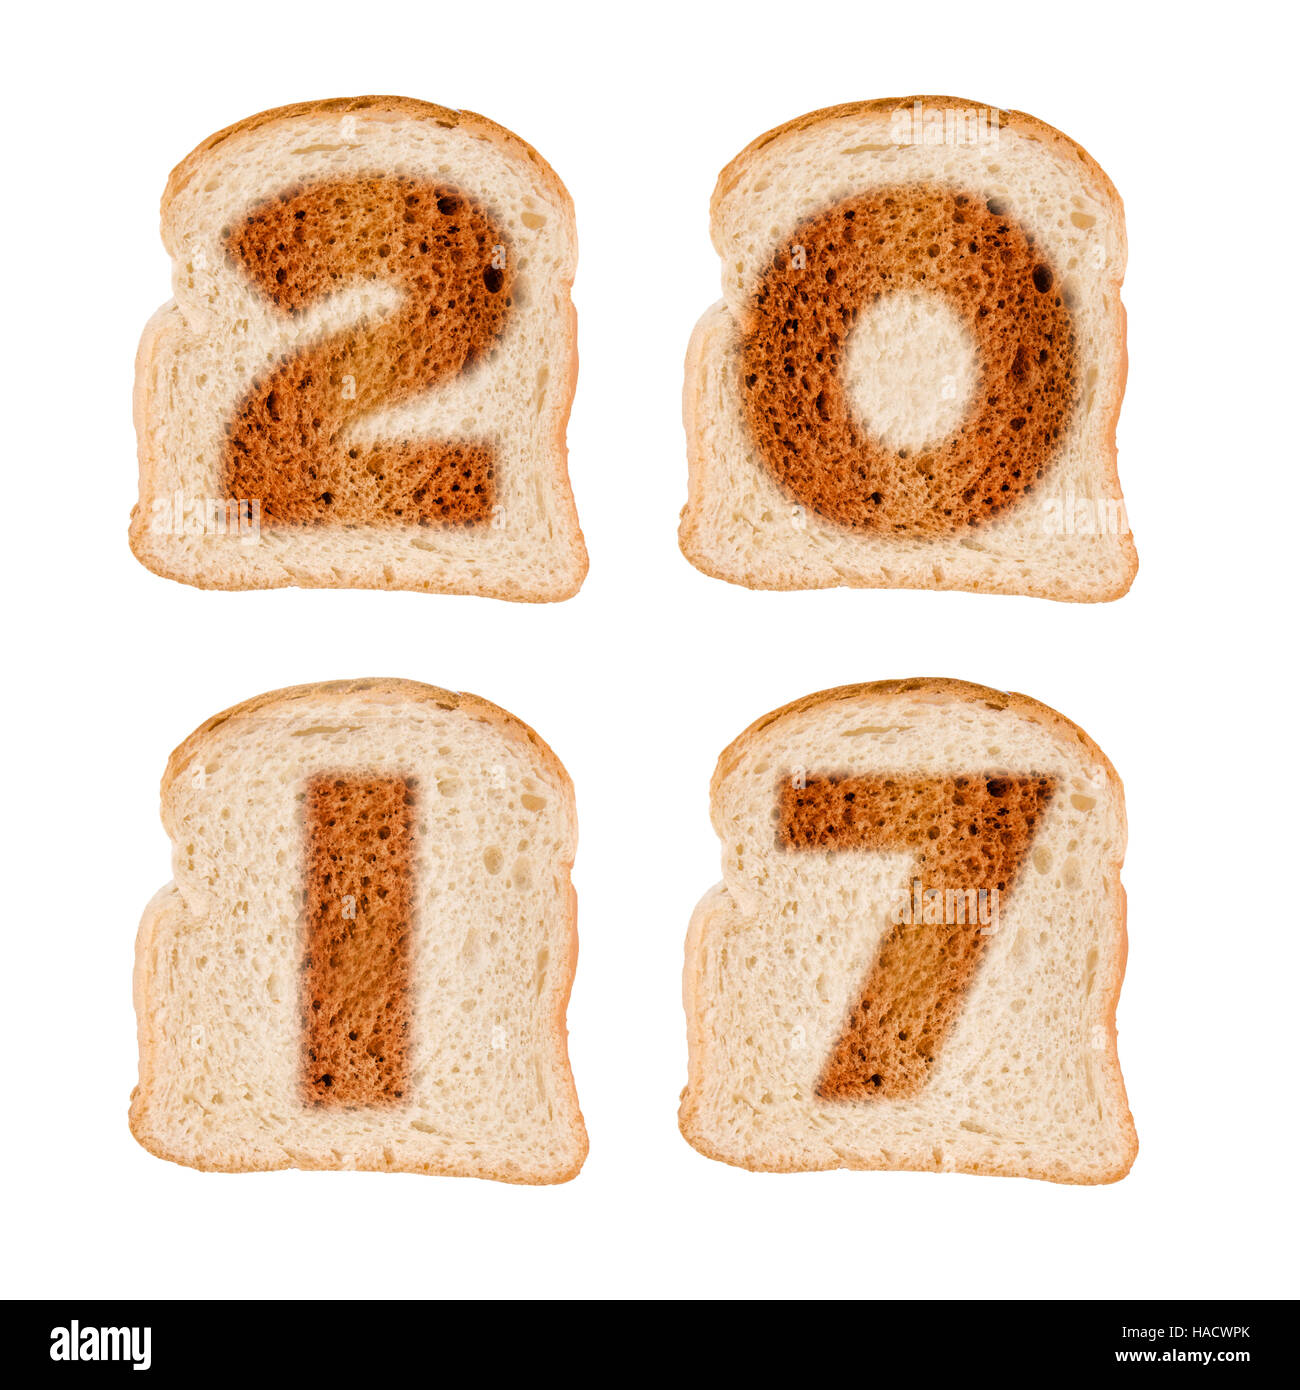 2017 Tarjeta de felicitación sobre rebanadas de pan tostado aislado sobre fondo blanco. Foto de stock